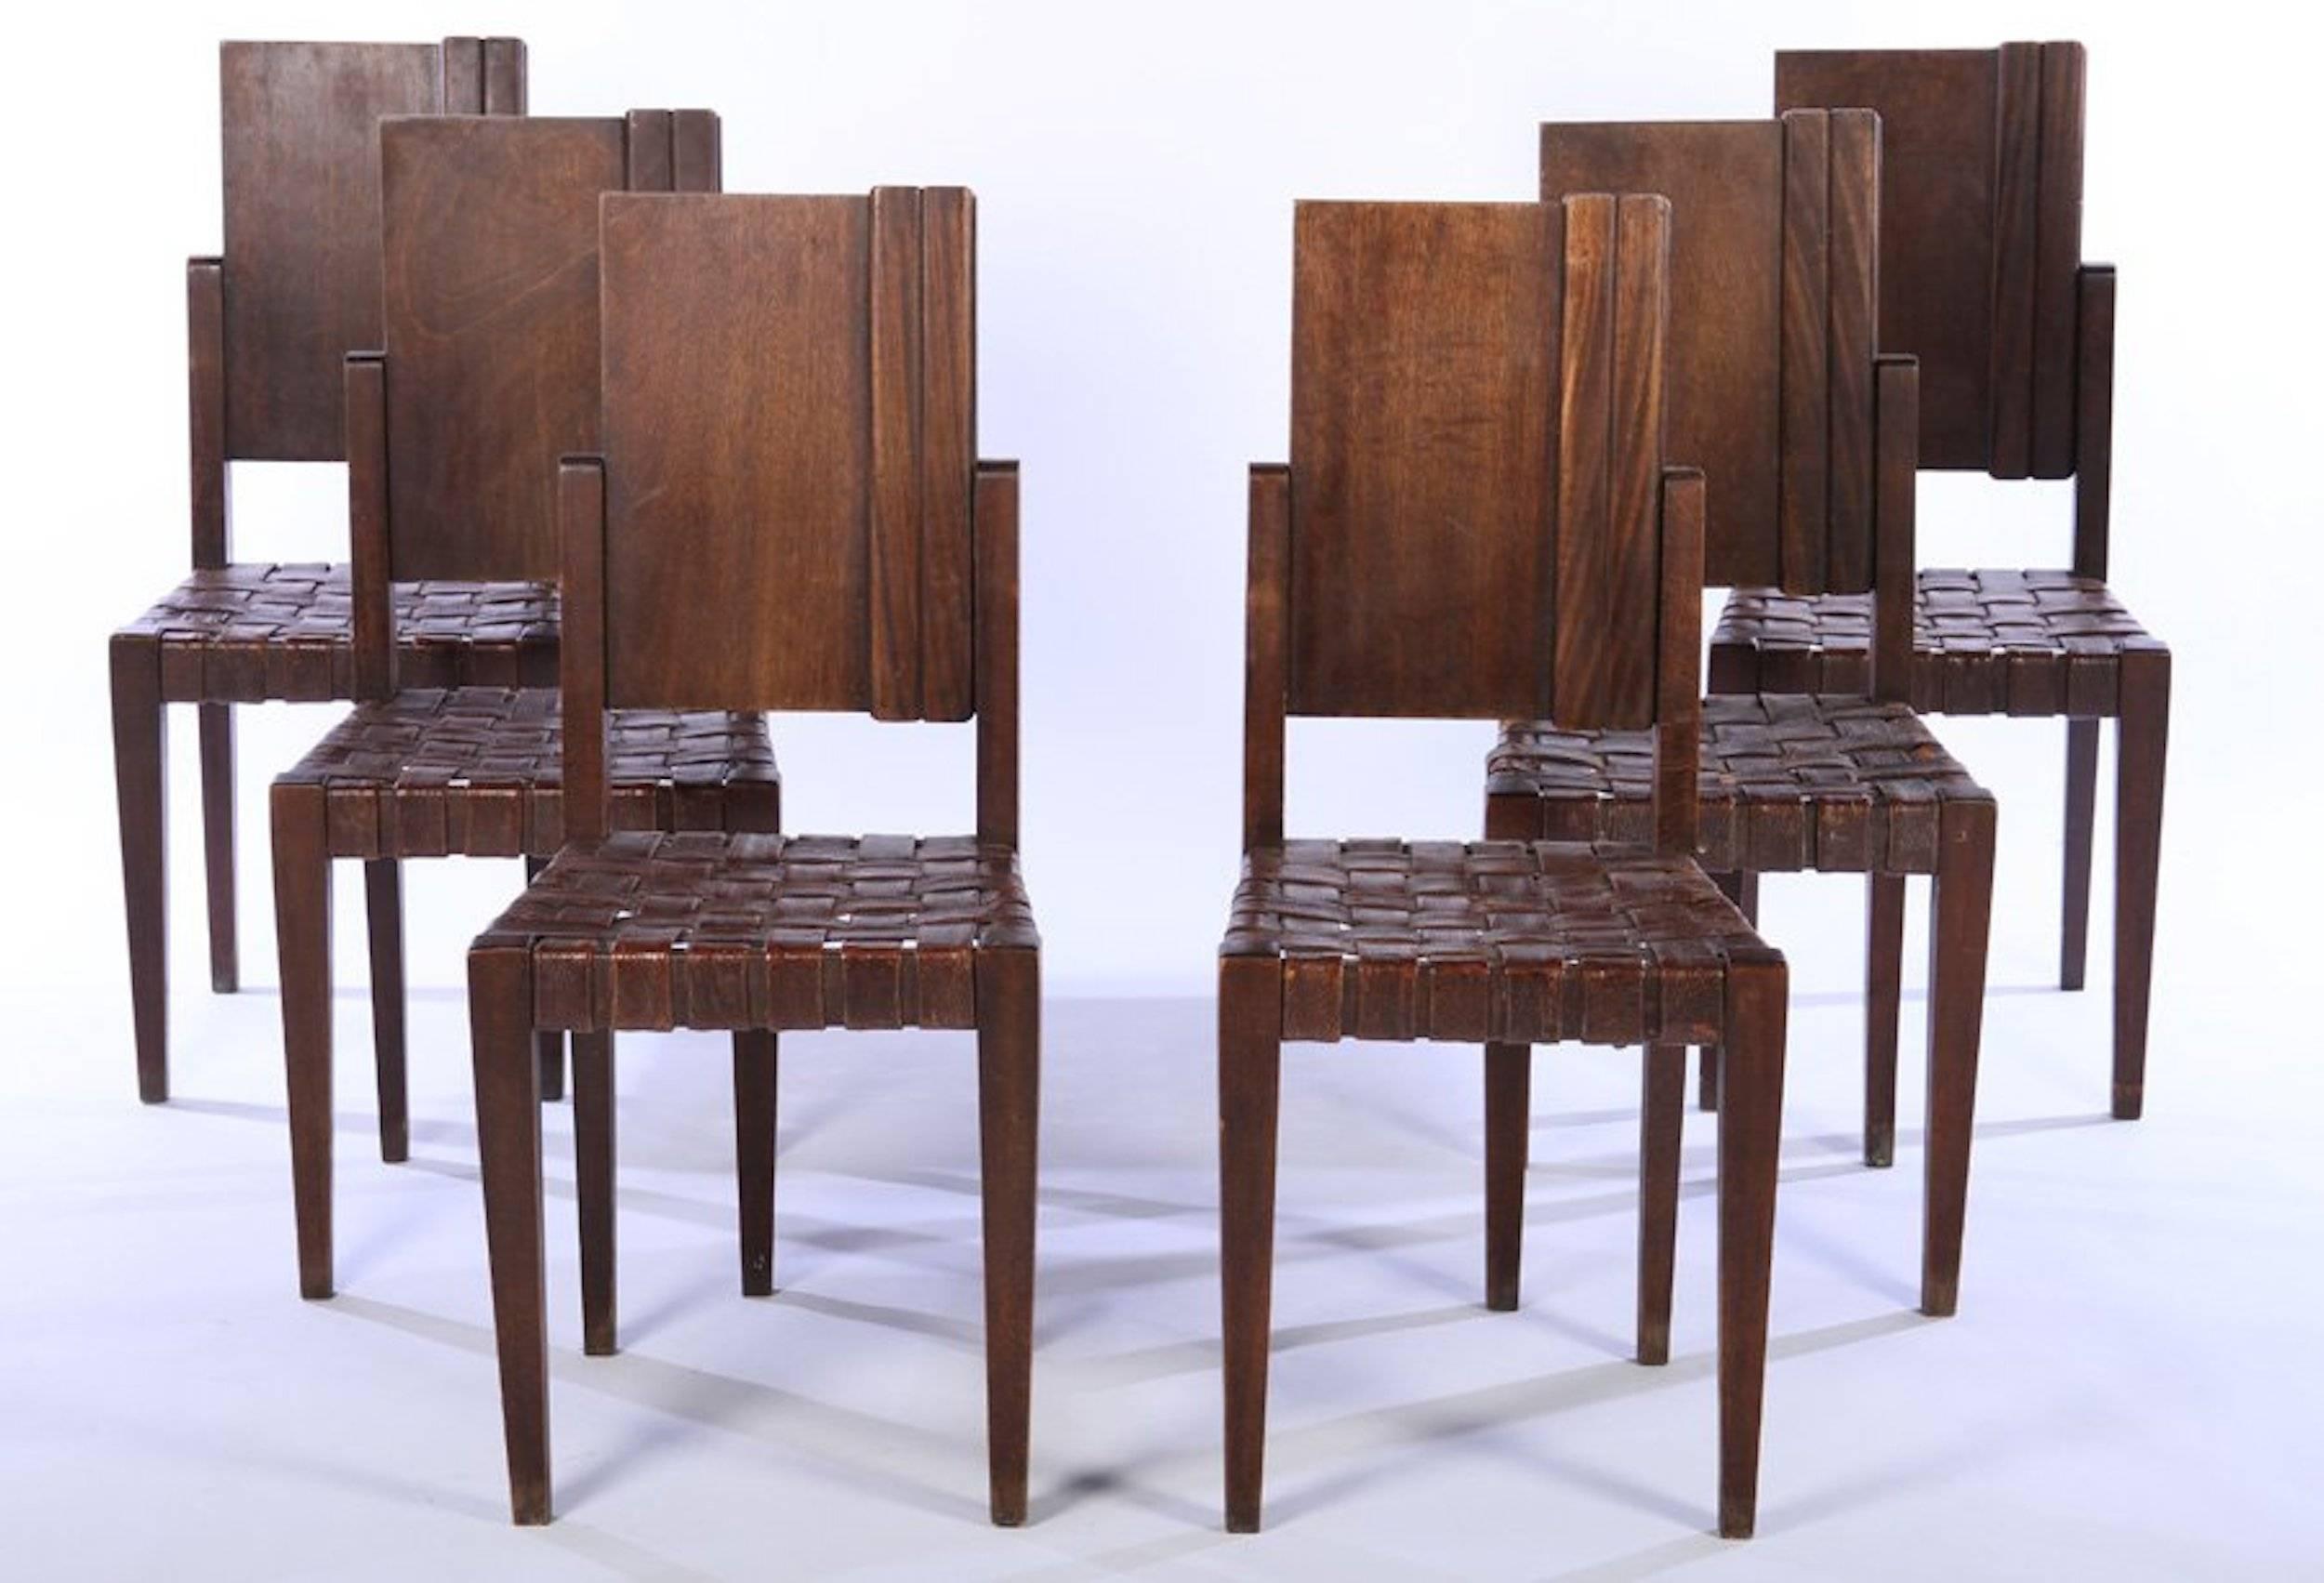 Belgian Modernist Side Chairs, Belgium 1940